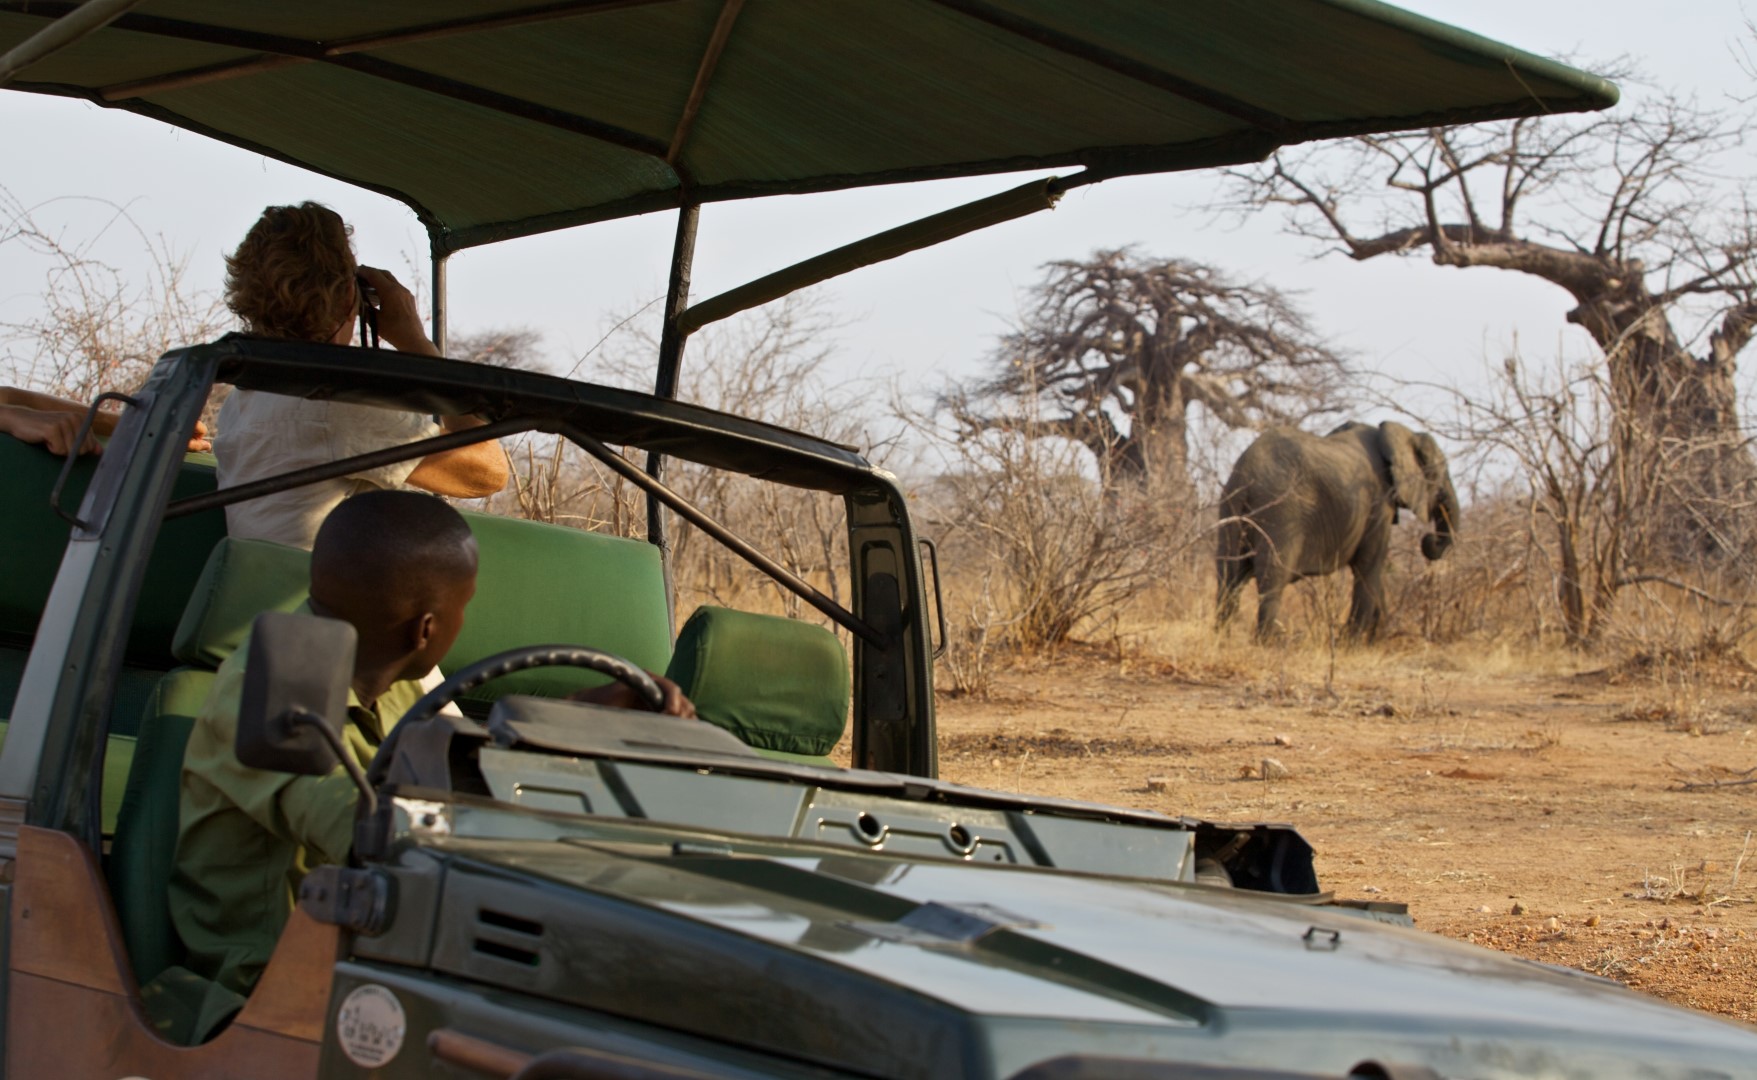 wp-content/uploads/itineraries/Southern Tanzania/ruaha-river-lodge-safari-1 (Large).jpg